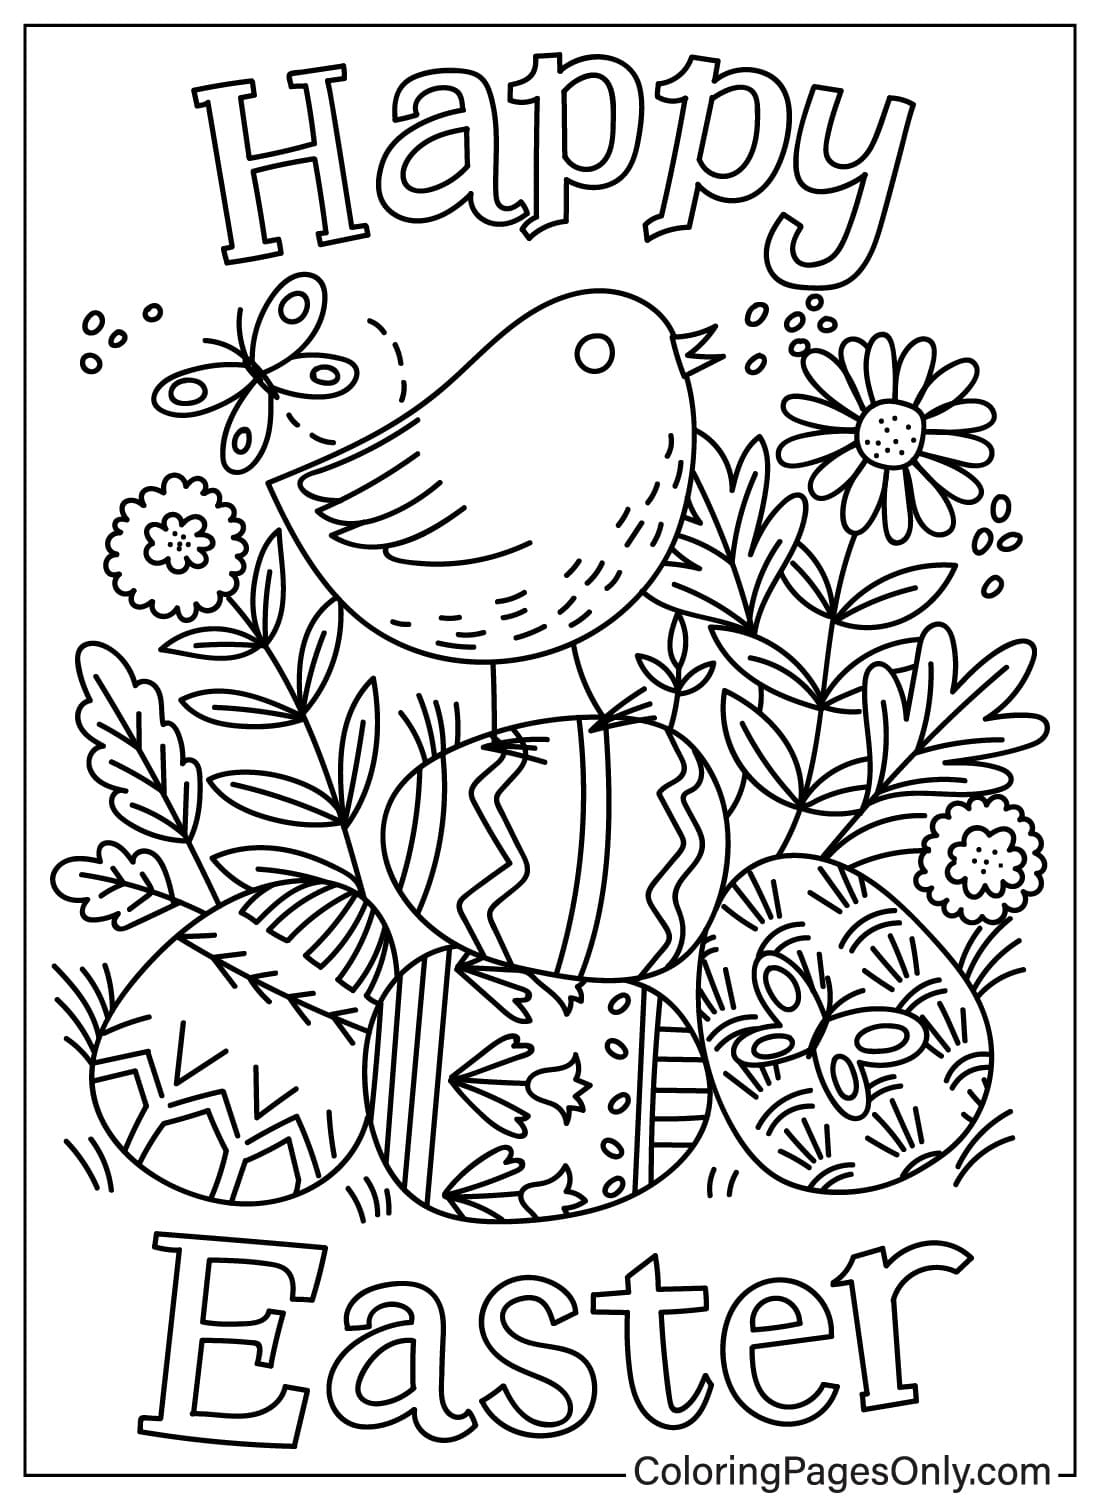 Tarjeta de Pascua Página para colorear imprimir gratis de Tarjeta de Pascua